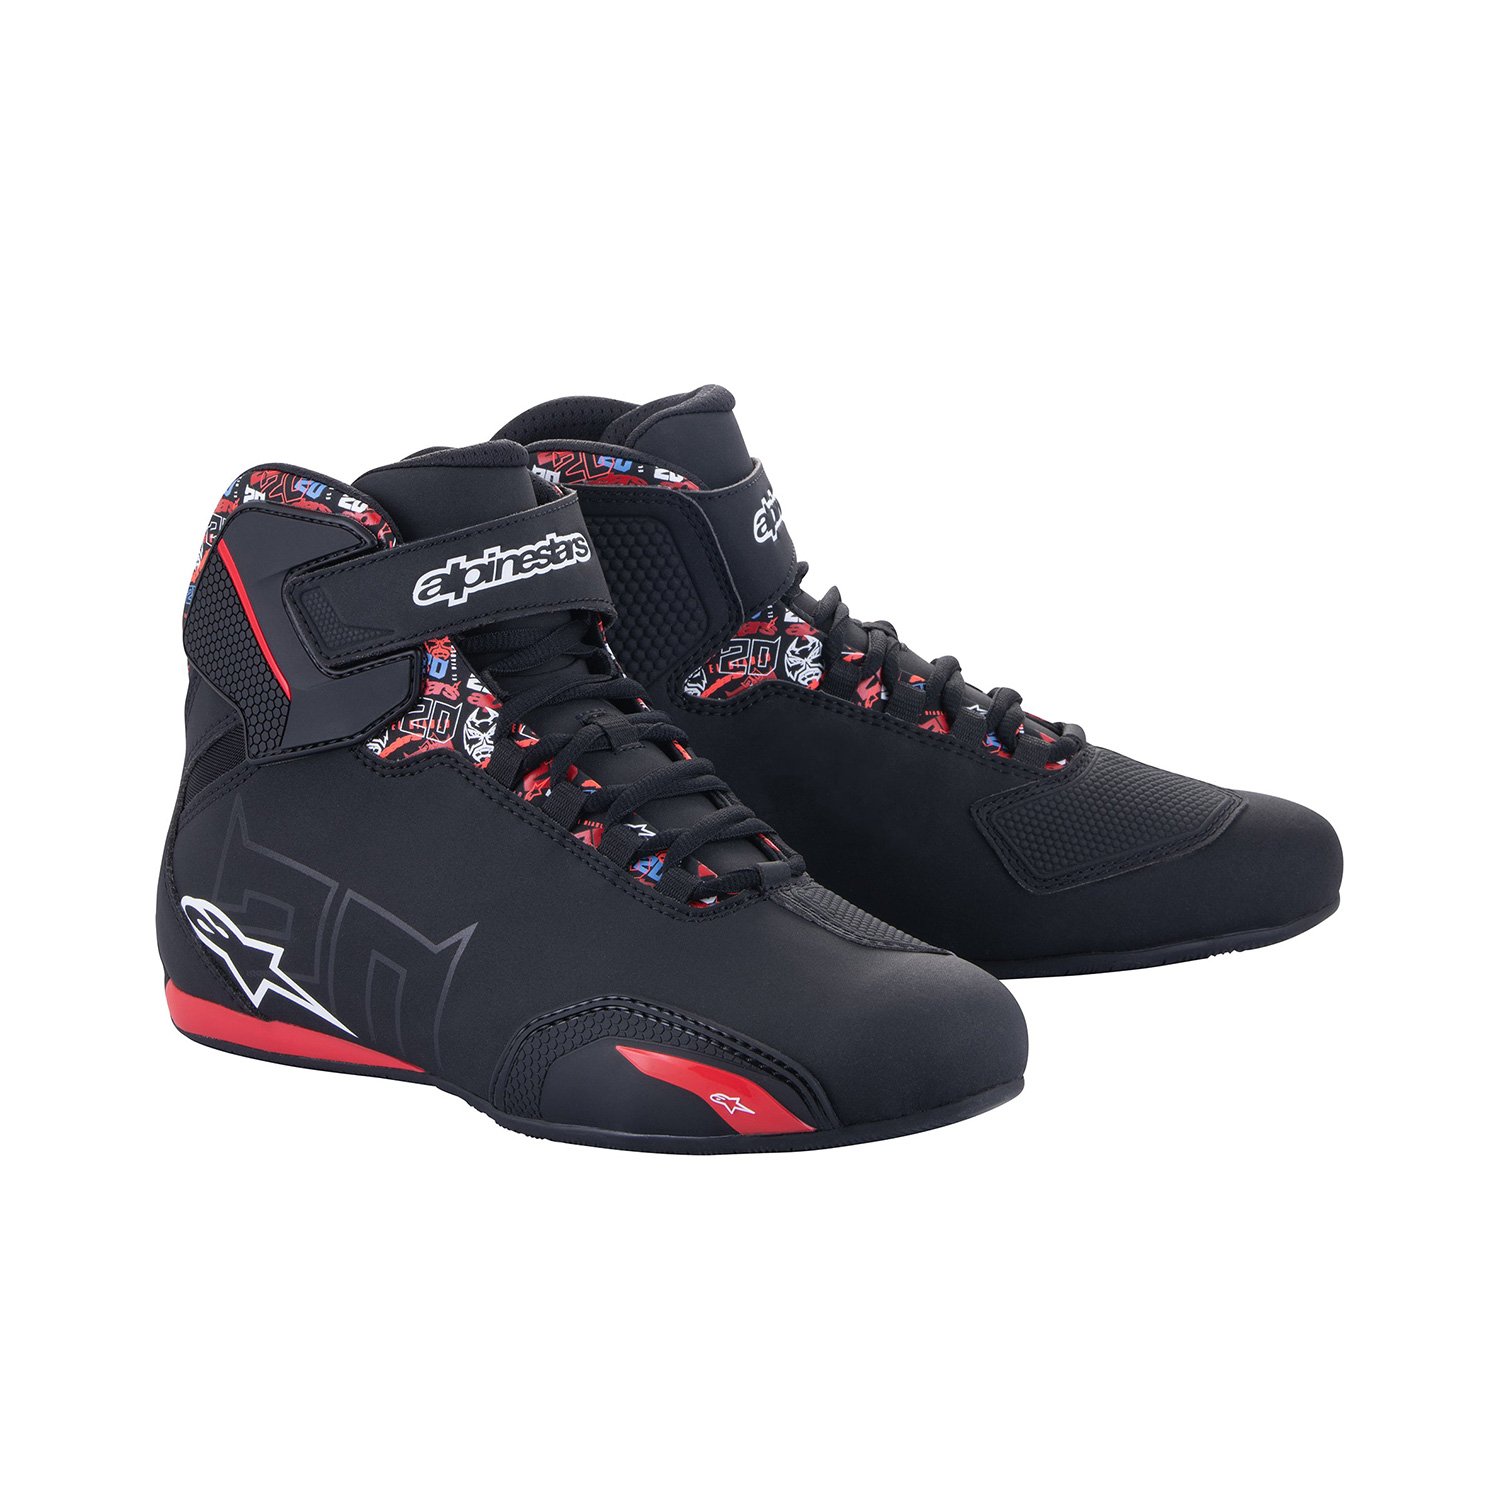 Image of Alpinestars FQ20 Sektor Shoes Black Bright Red Size US 11 ID 8059347261508